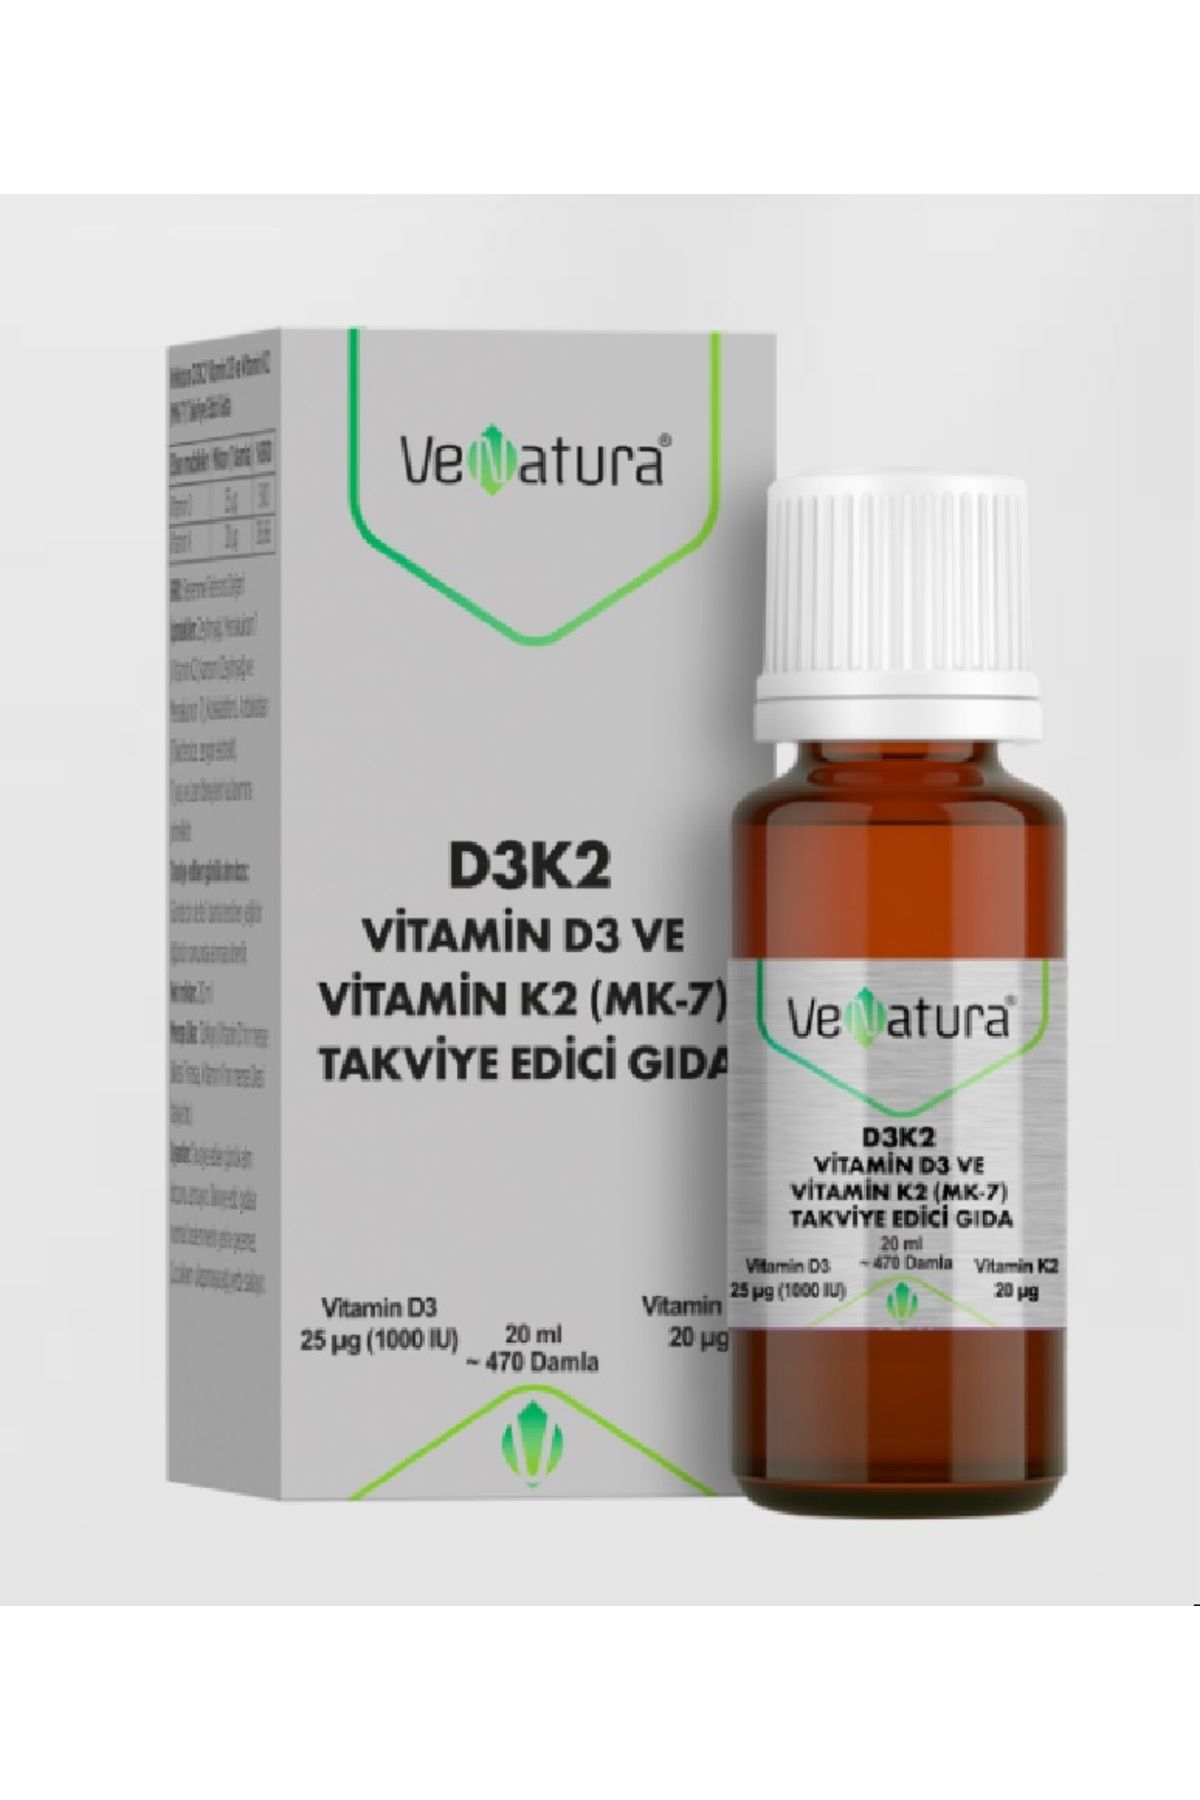 Venatura Vitamin D3 Ve Menaquinon 7 Takviye Edici Gıda 20 ml